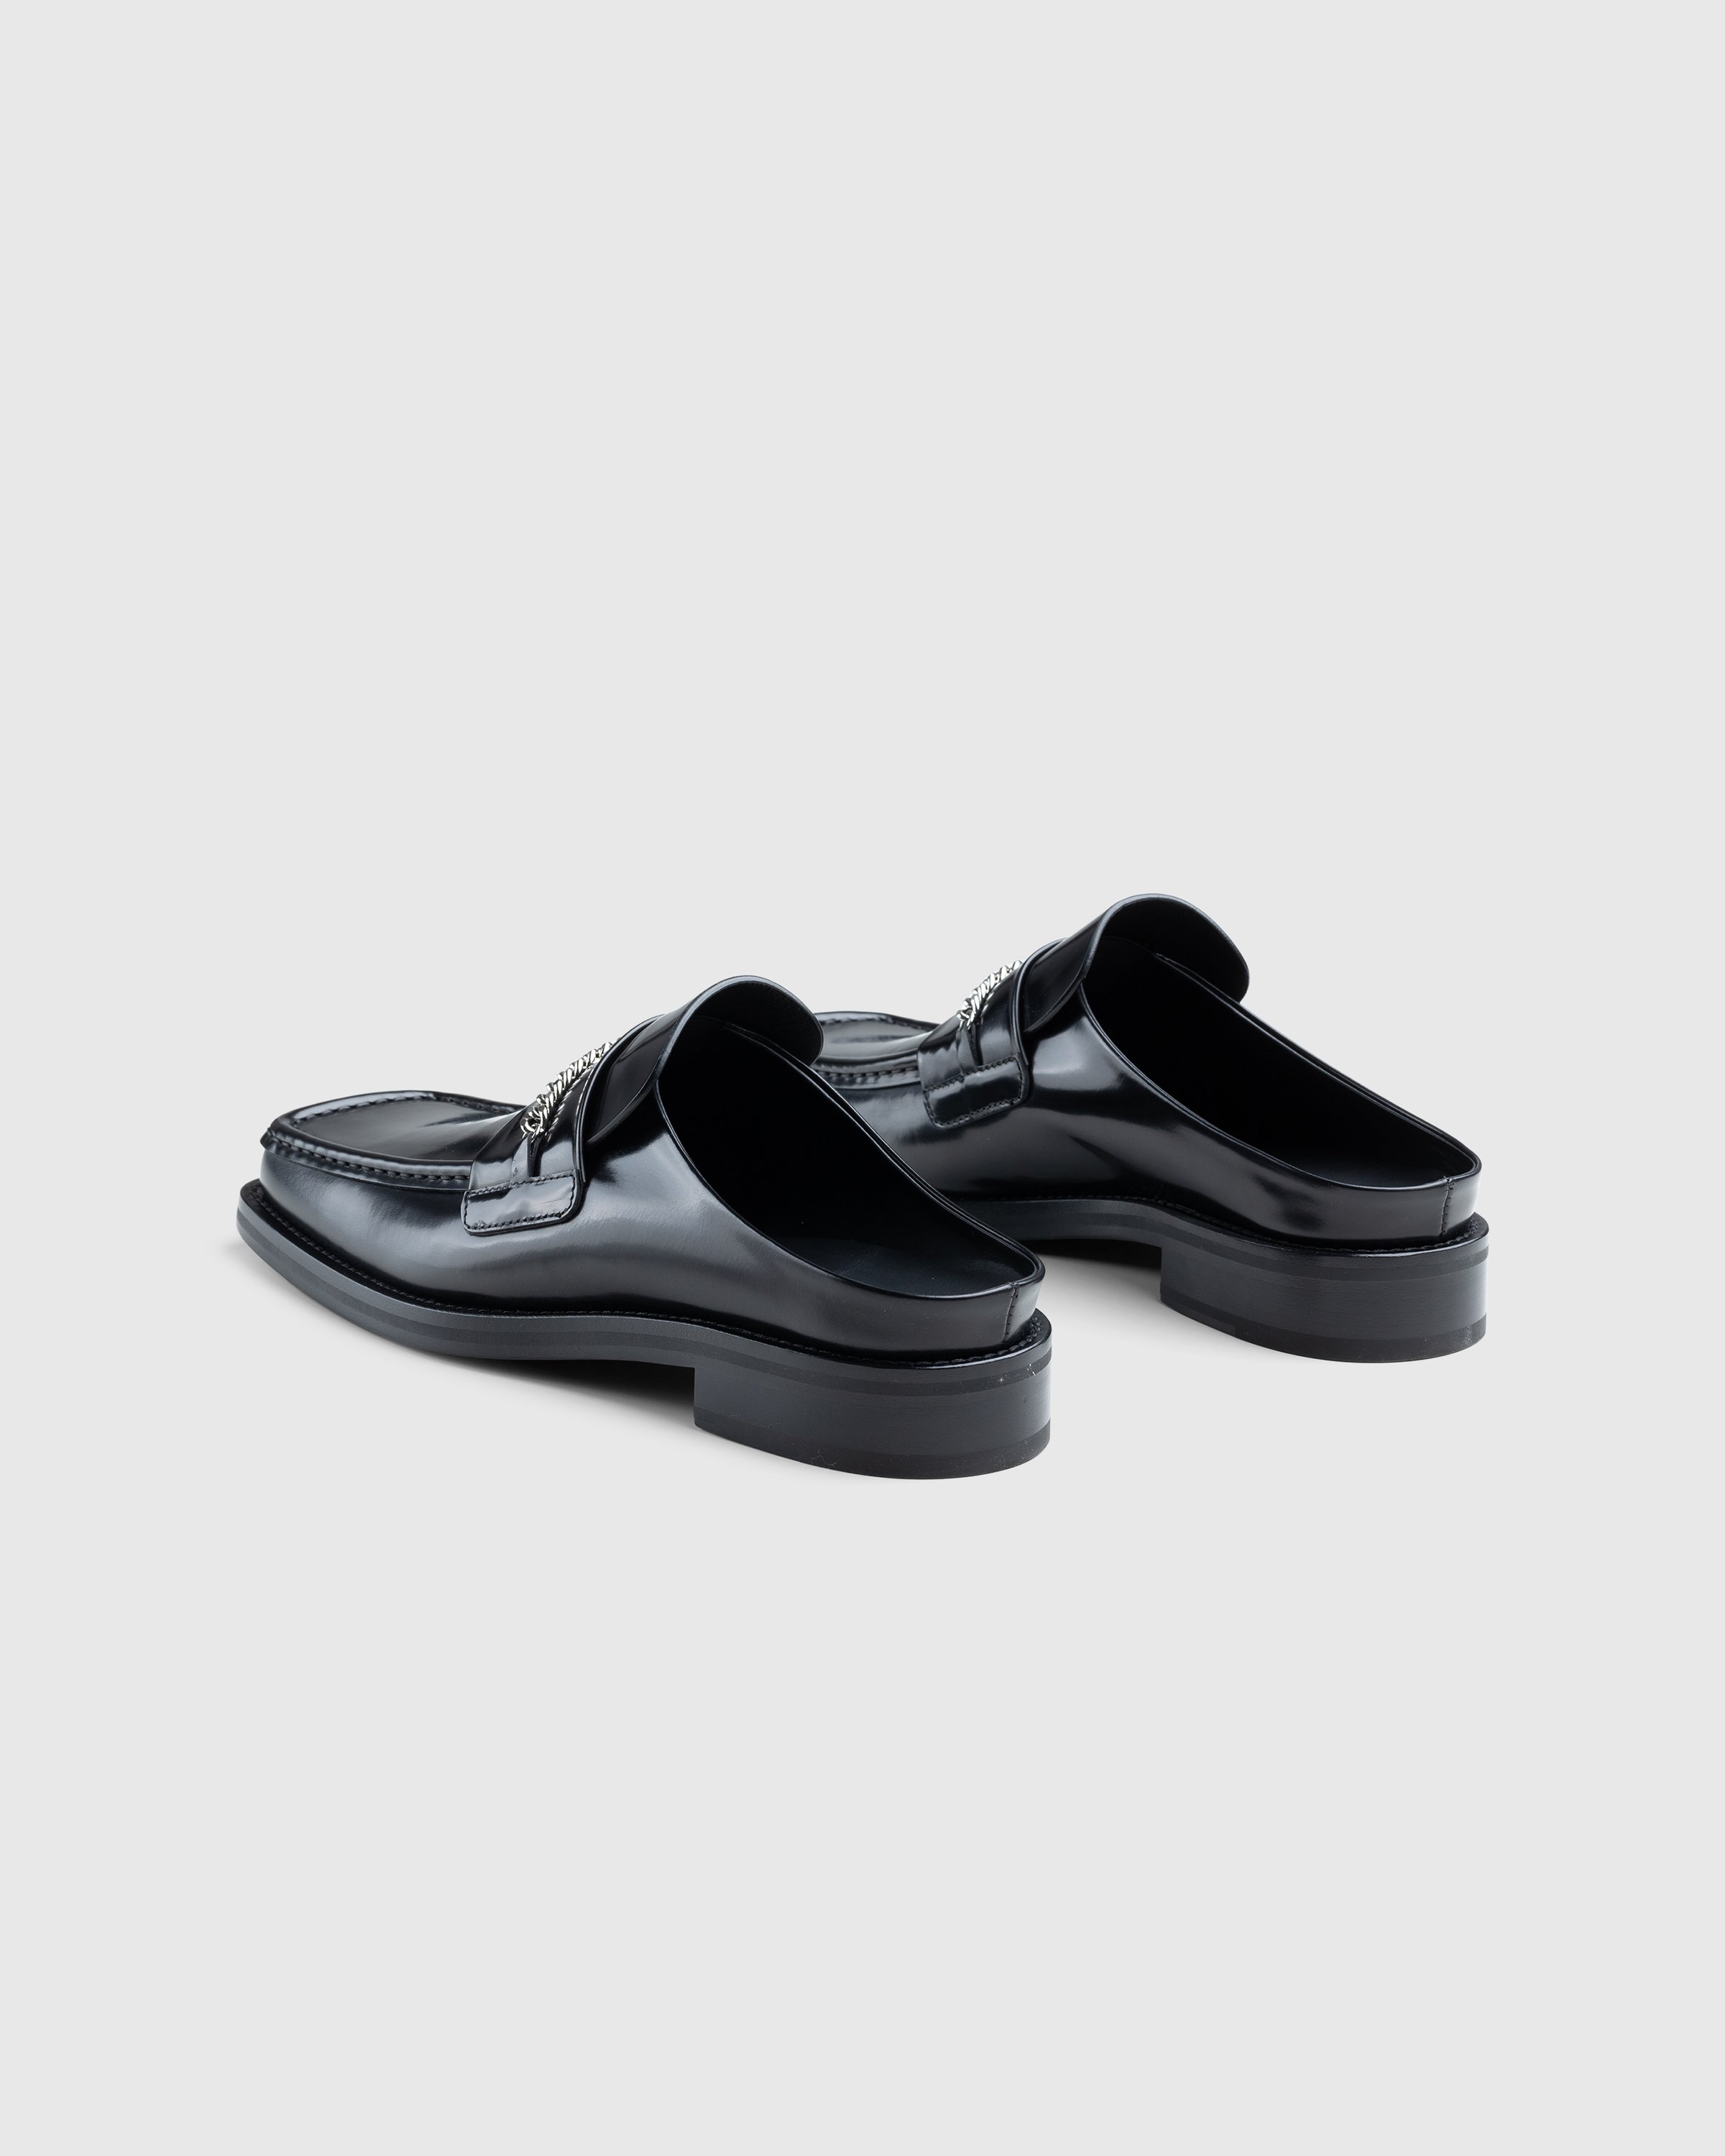 Martine Rose - Square Toe Mule Black High Shine - Footwear - Black - Image 4